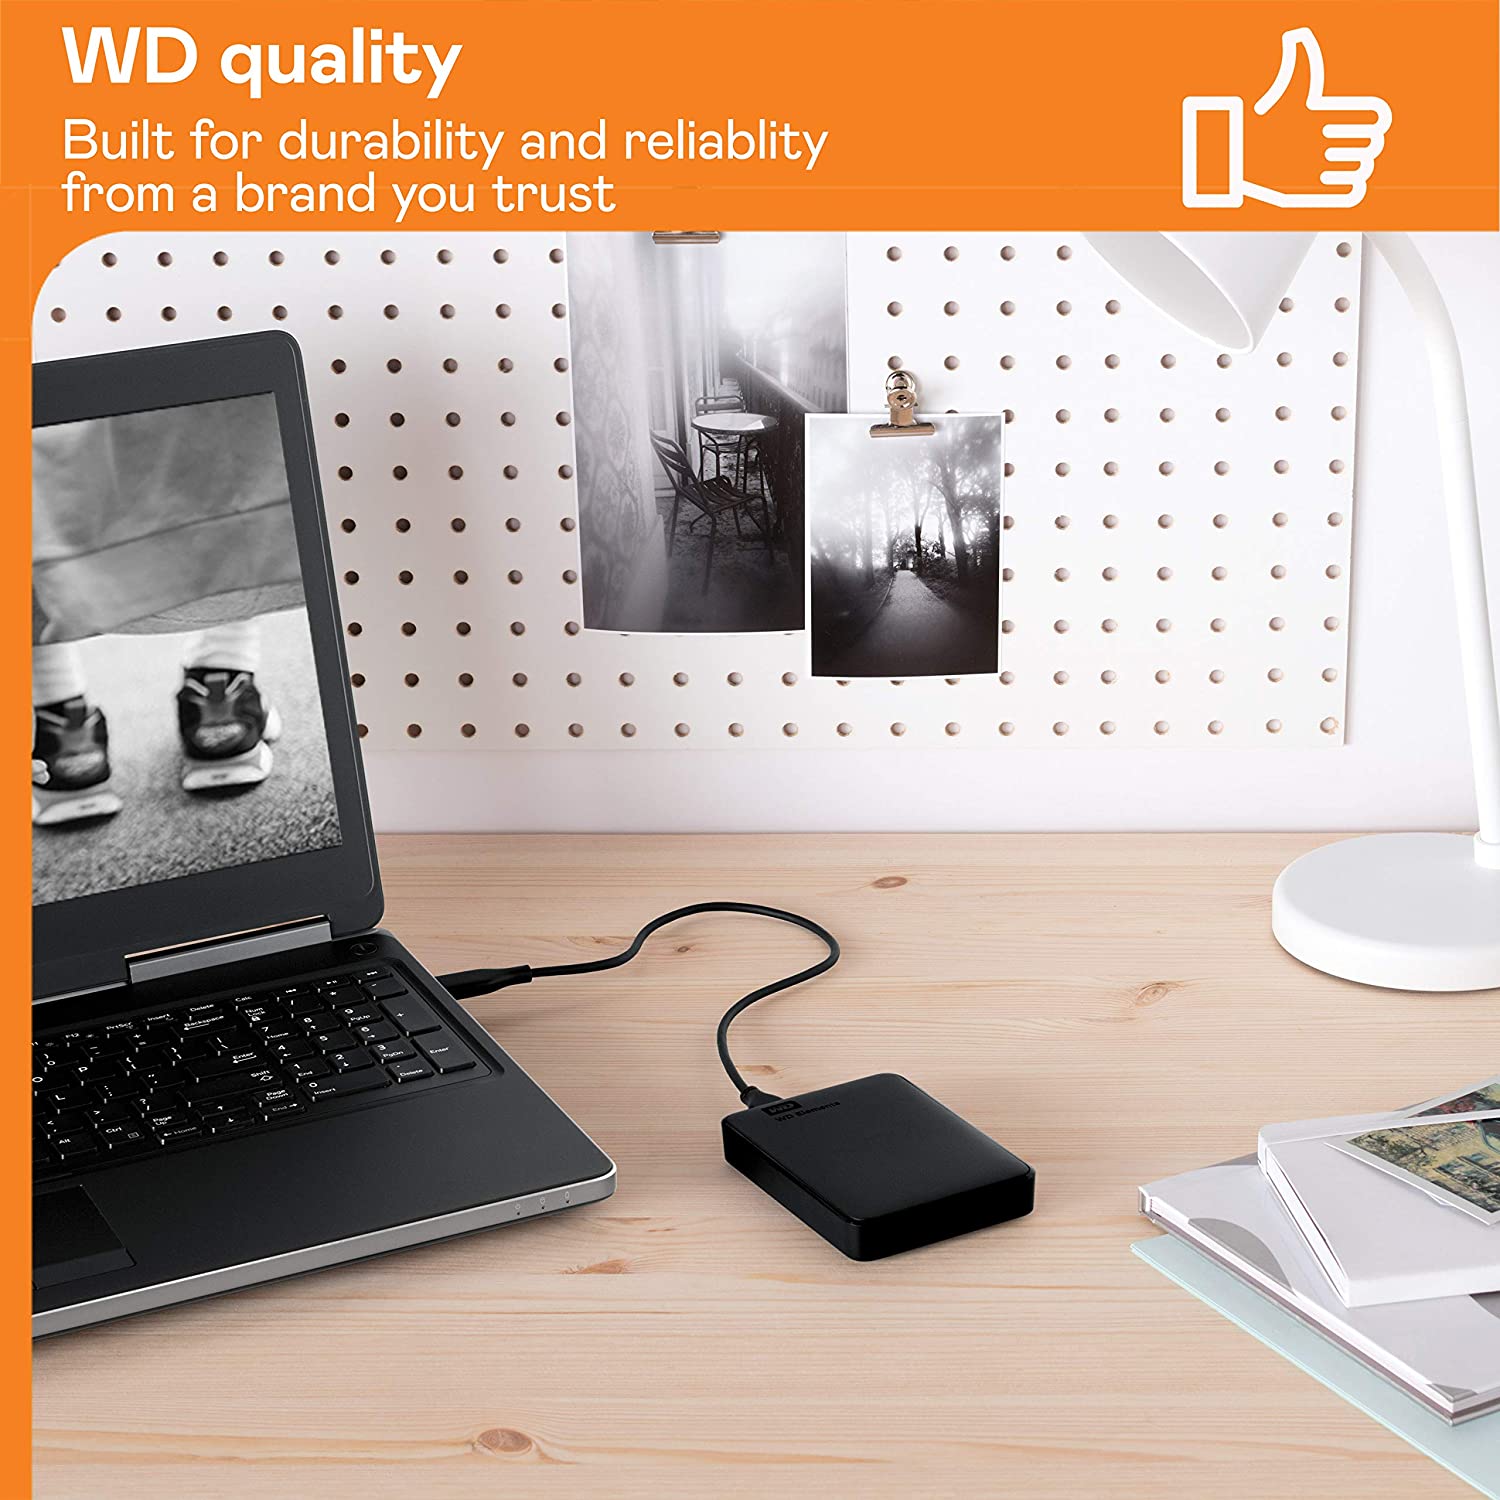 Disque dur externe portable WD Elements 5 To, USB 3.0 - WDBU6Y0050BBK-WESN, Noir